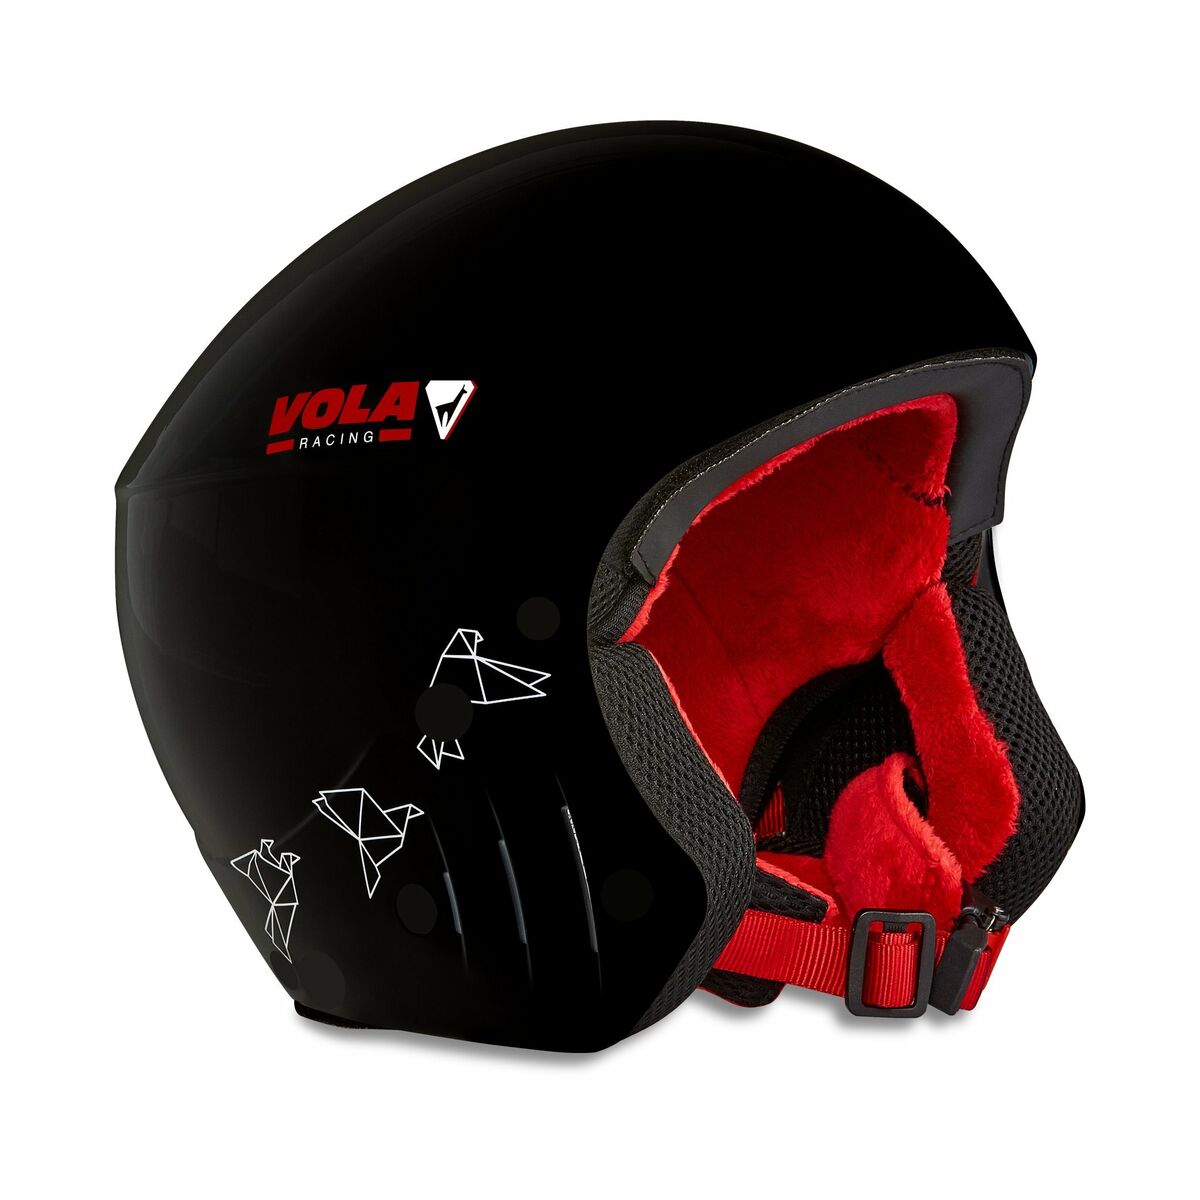 Ski Helmet Vola Black 50 cm (Refurbished B)